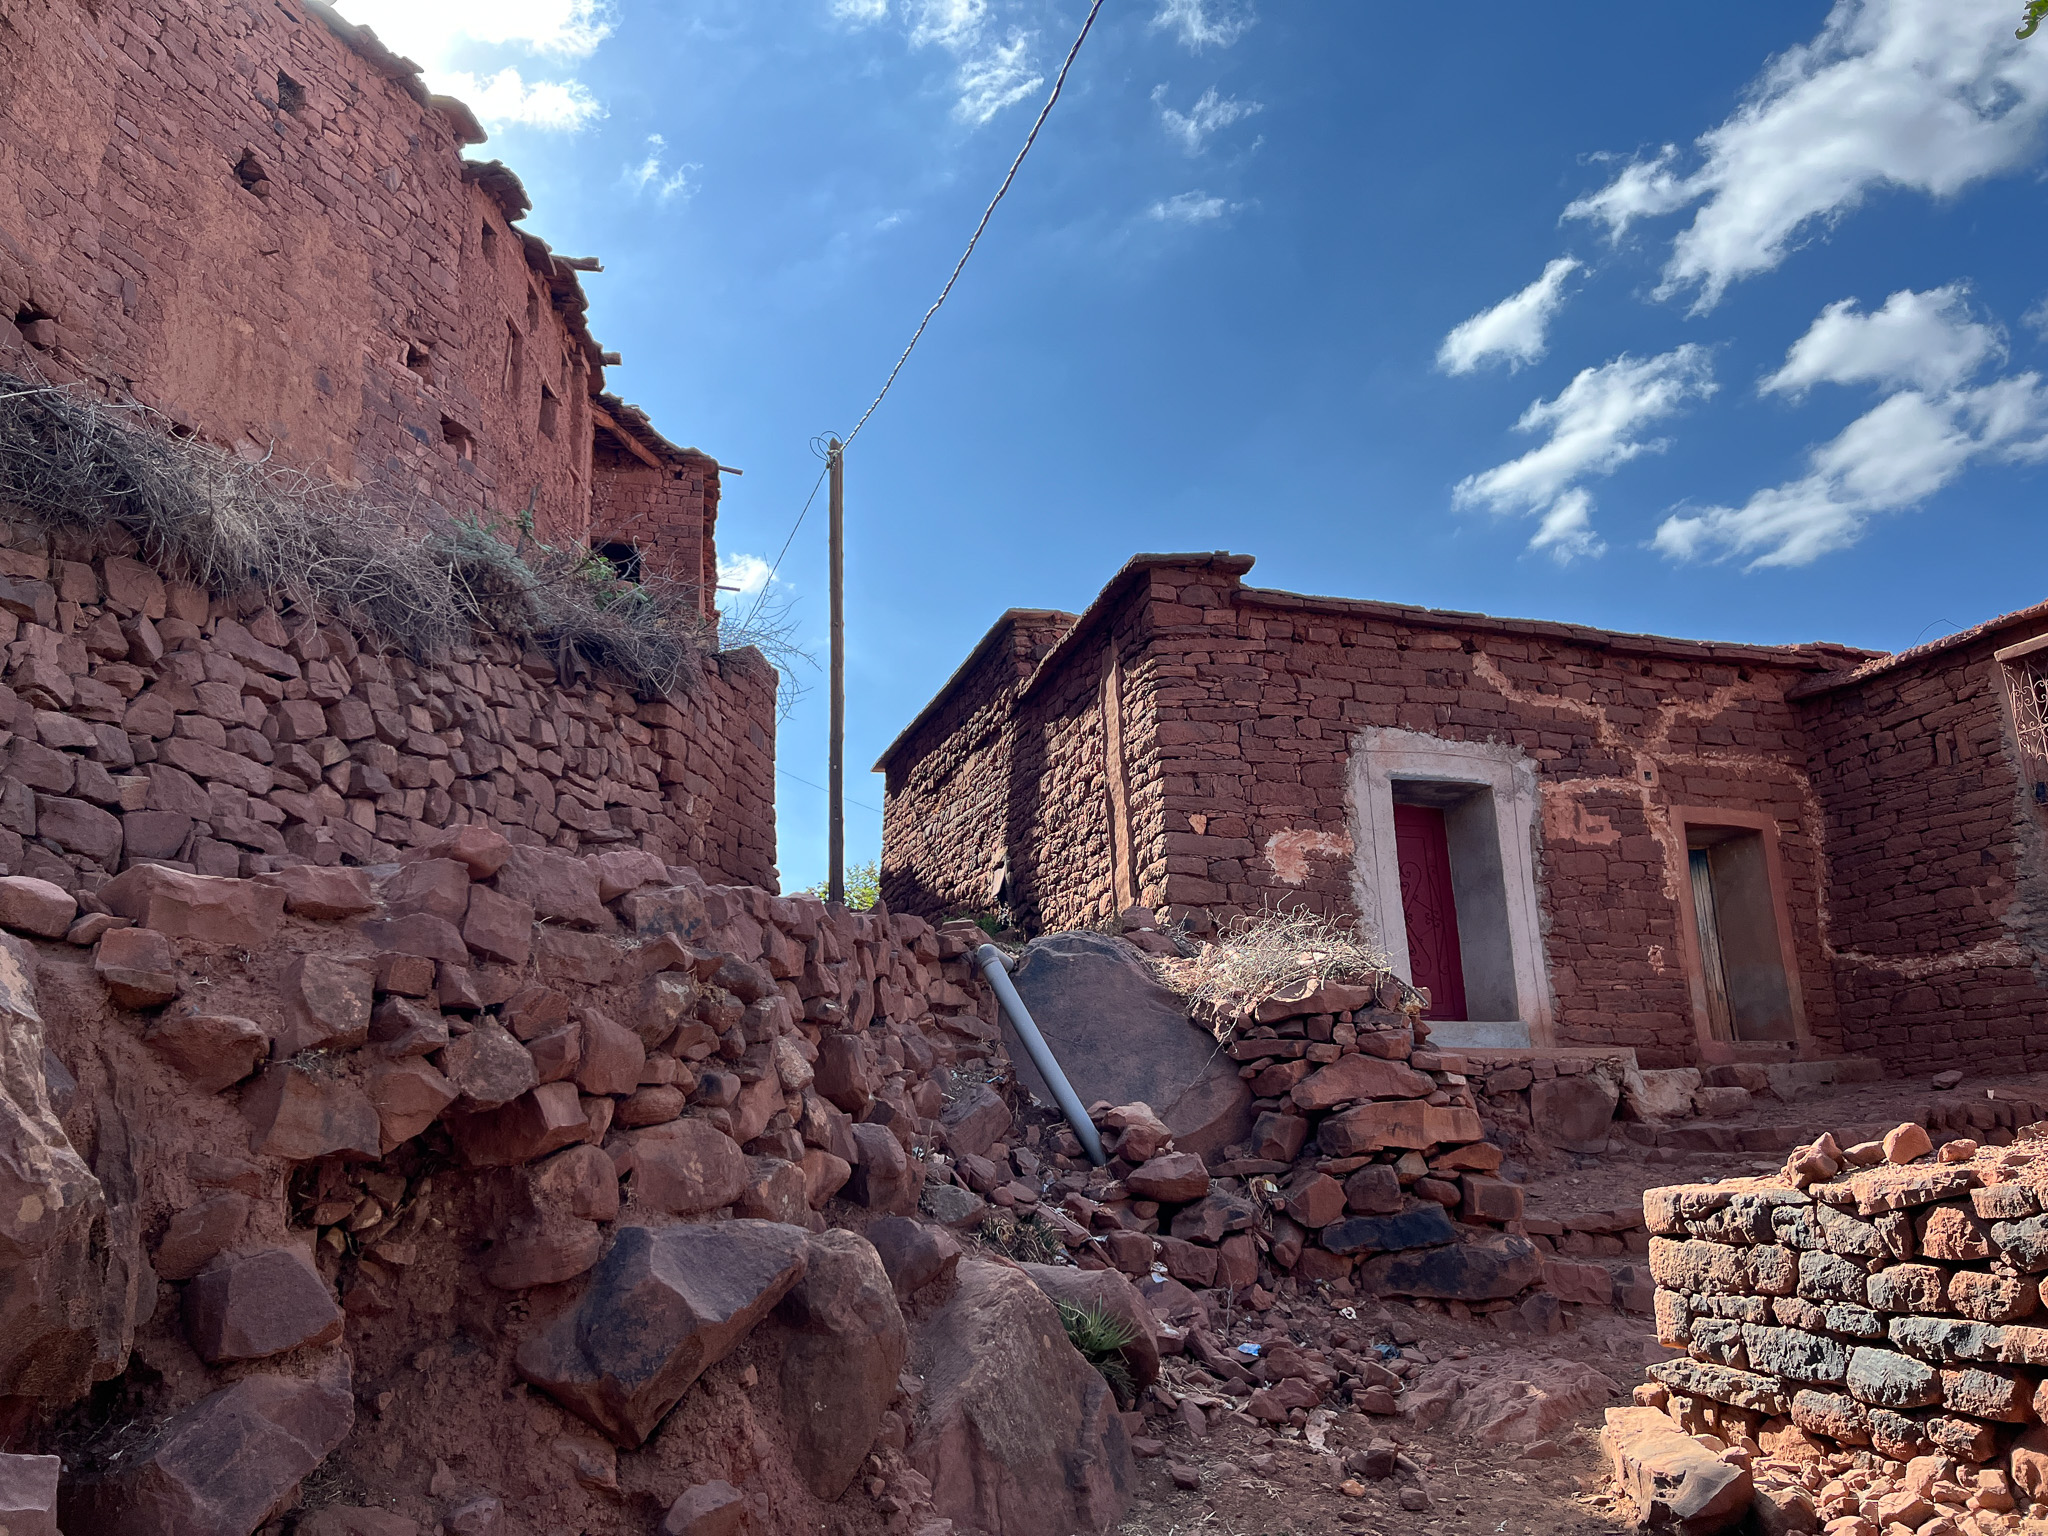 Morocco Earthquake Appeal